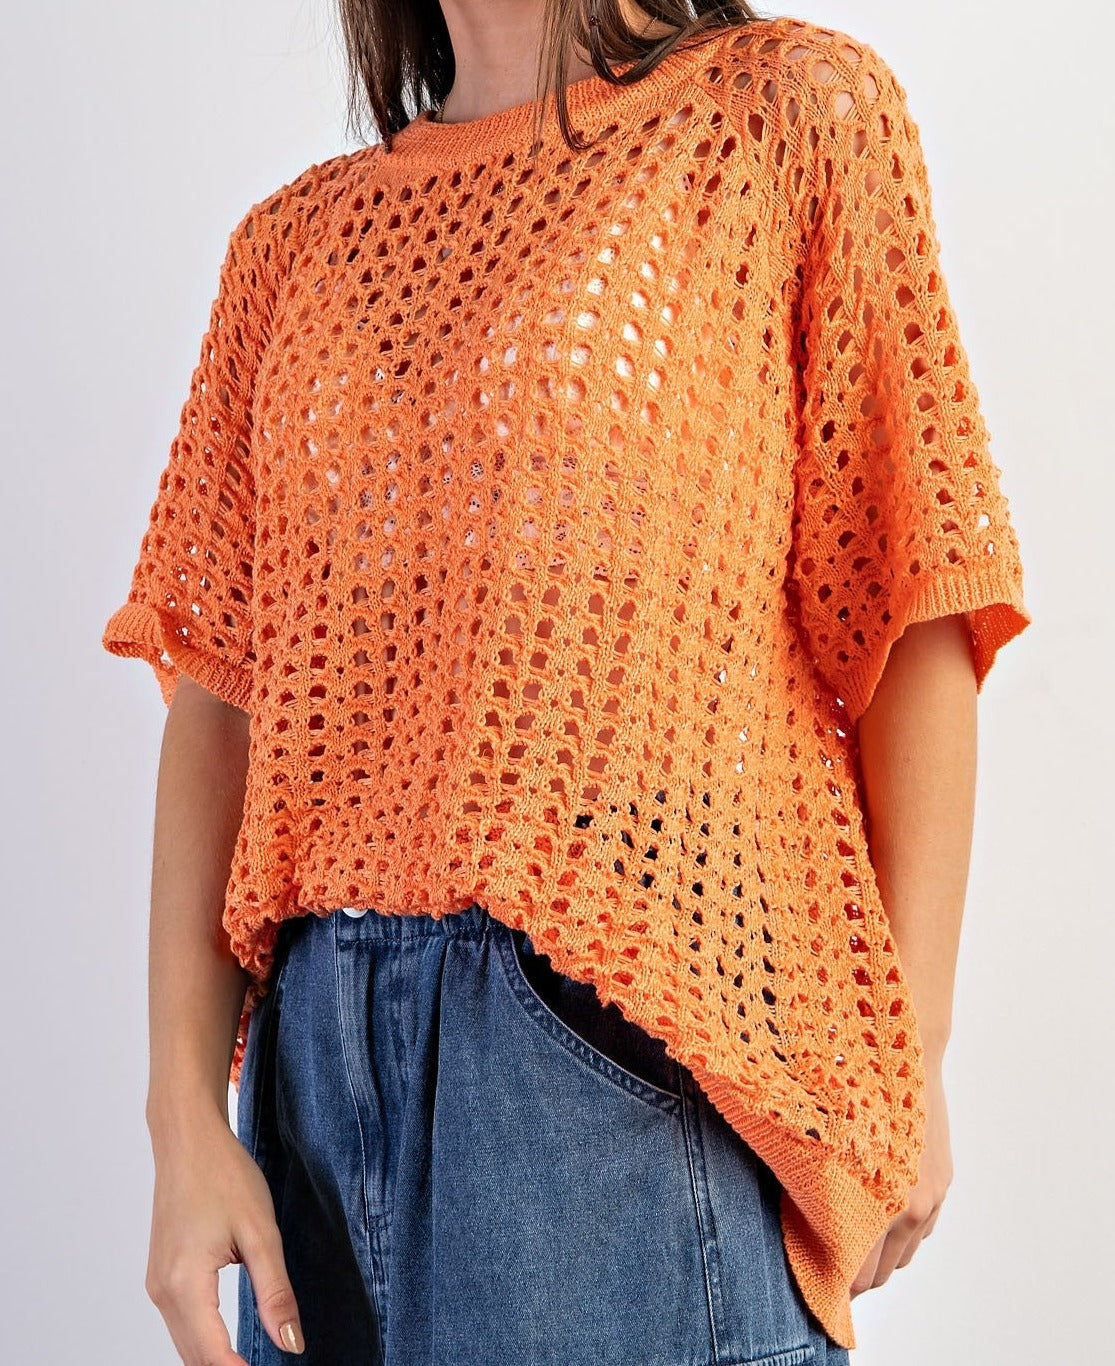 Orange Fishnet Knitted Sweater - Brazos Avenue Market 